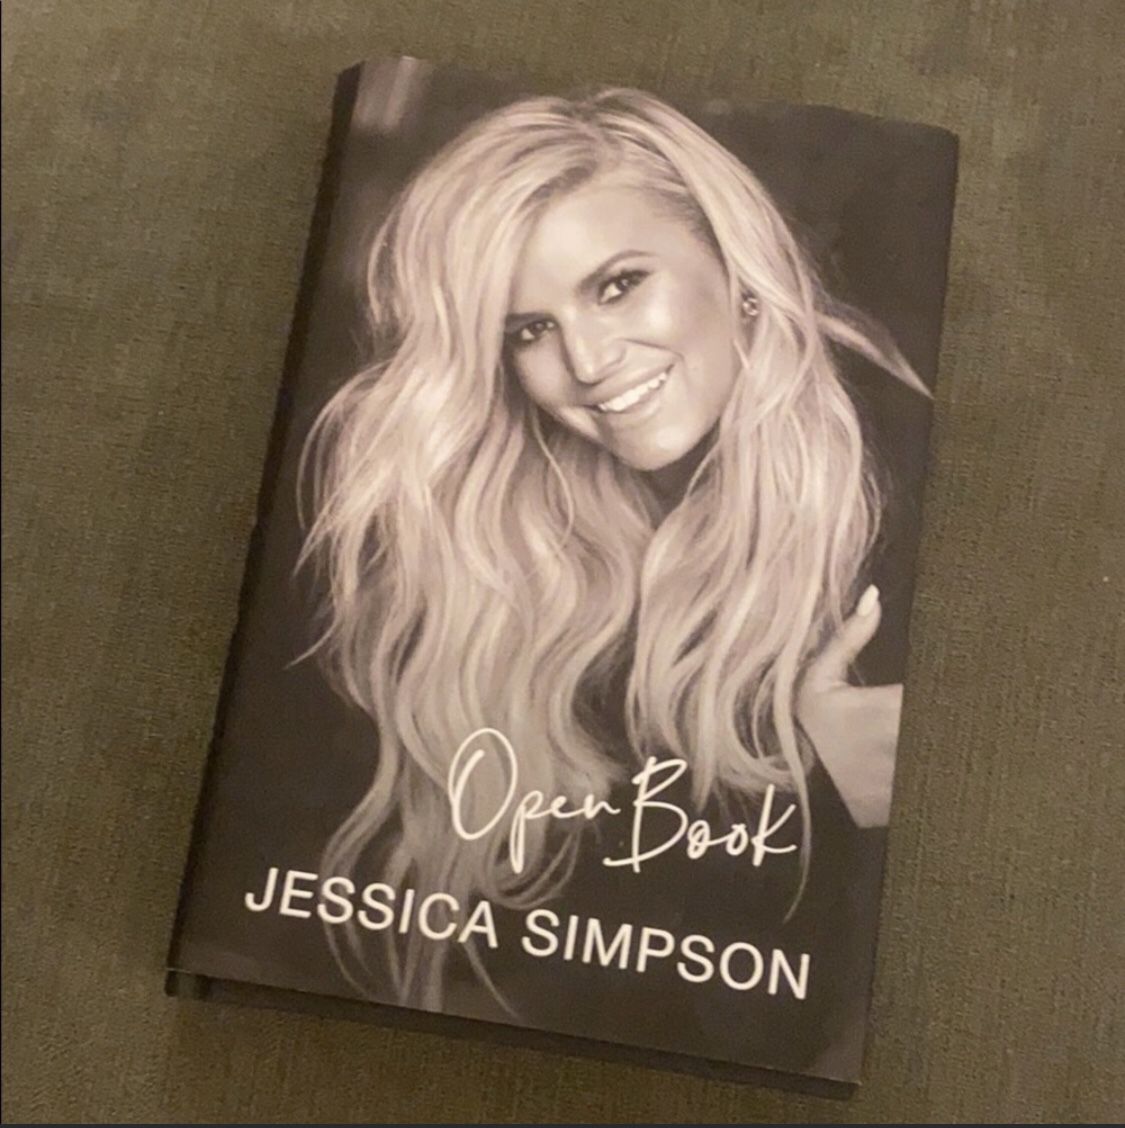 Jessica Simpson “Open Book” 📚